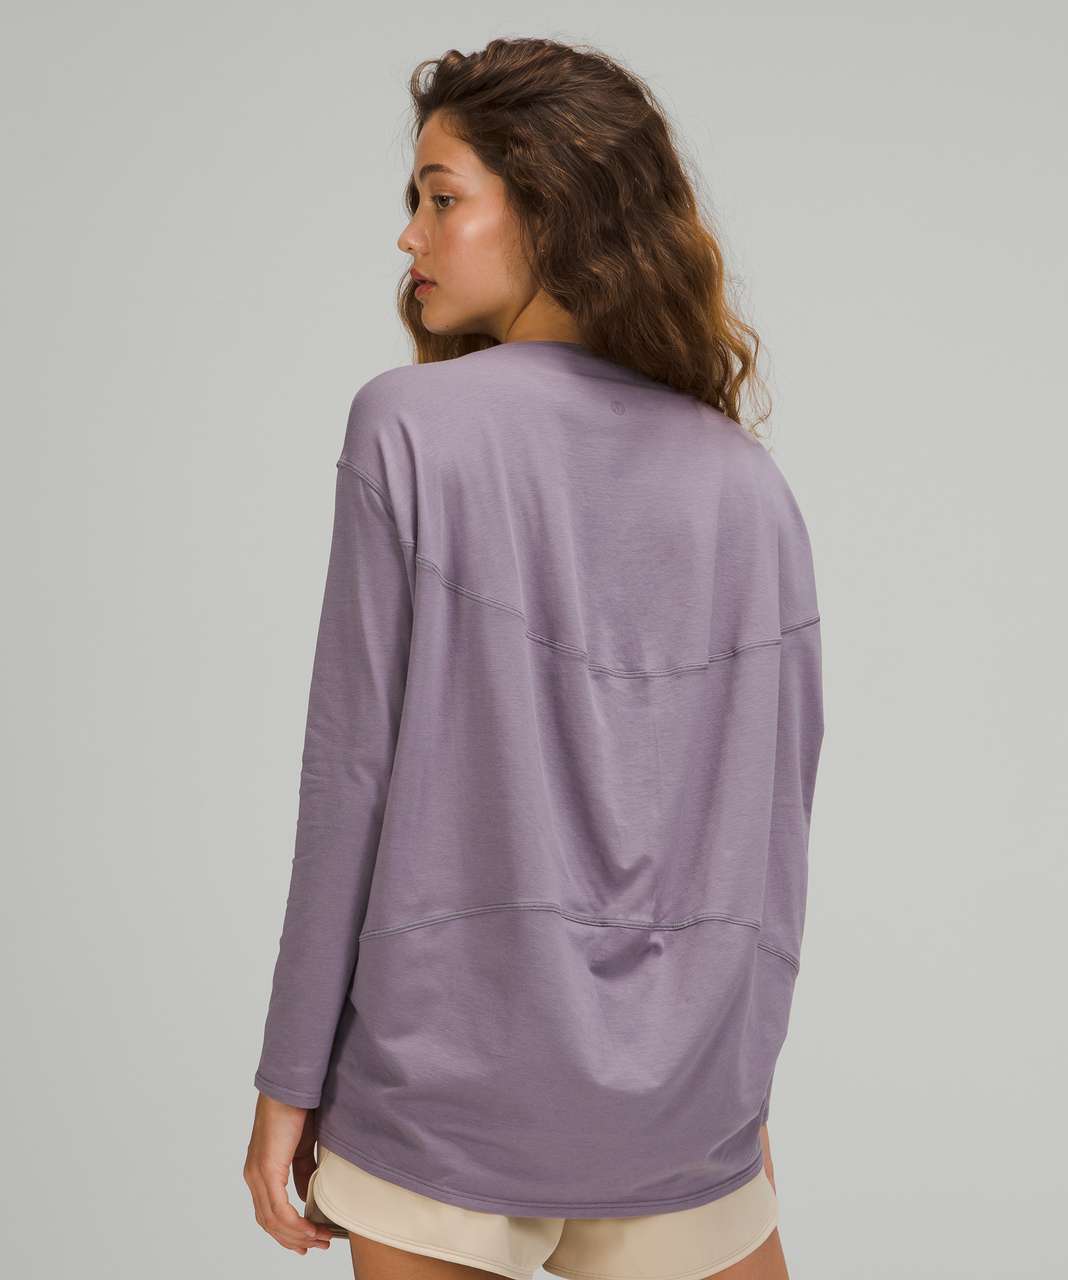 Lululemon Back In Action Long Sleeve Shirt - Dusky Lavender